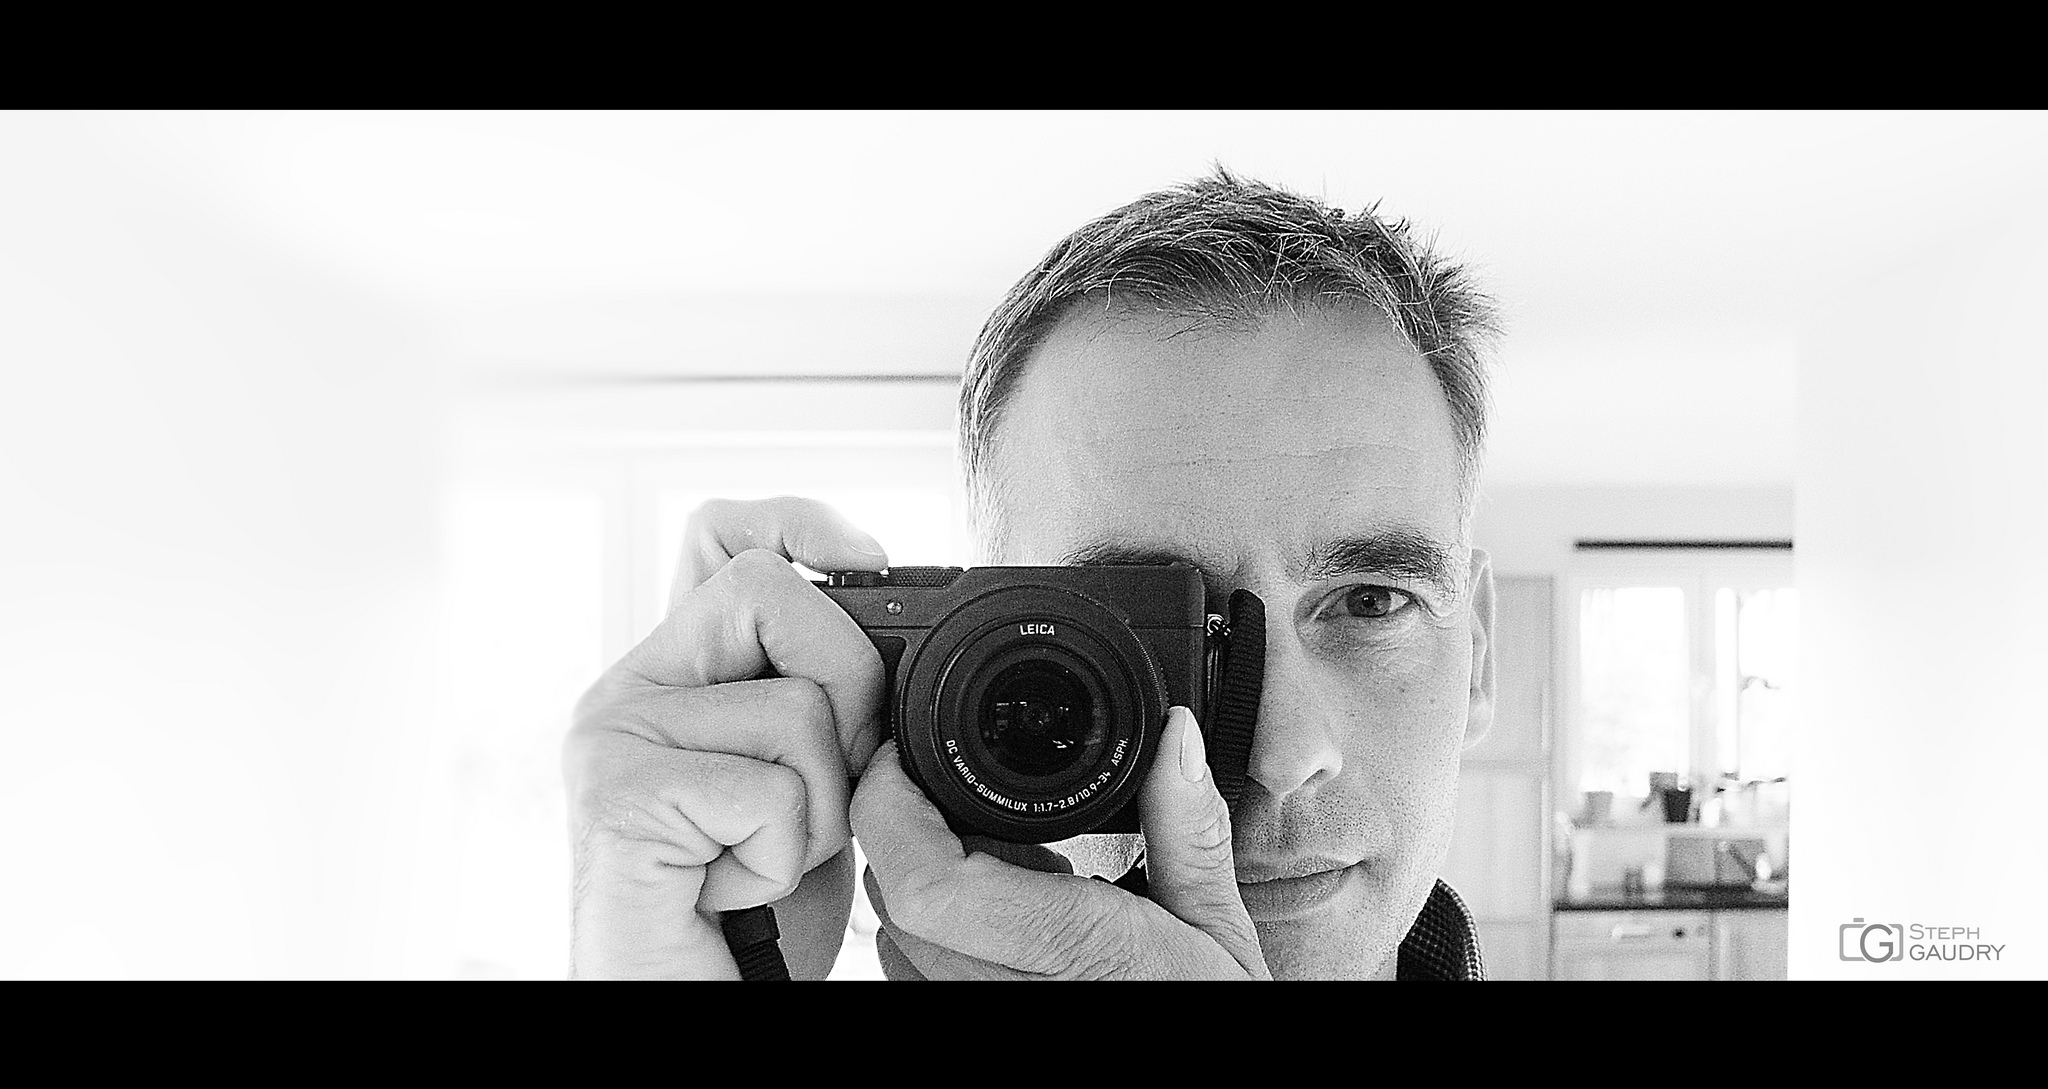 Autoportrait Lumix objectif Leica Summilux 1:1.7 24-70 [Click to start slideshow]